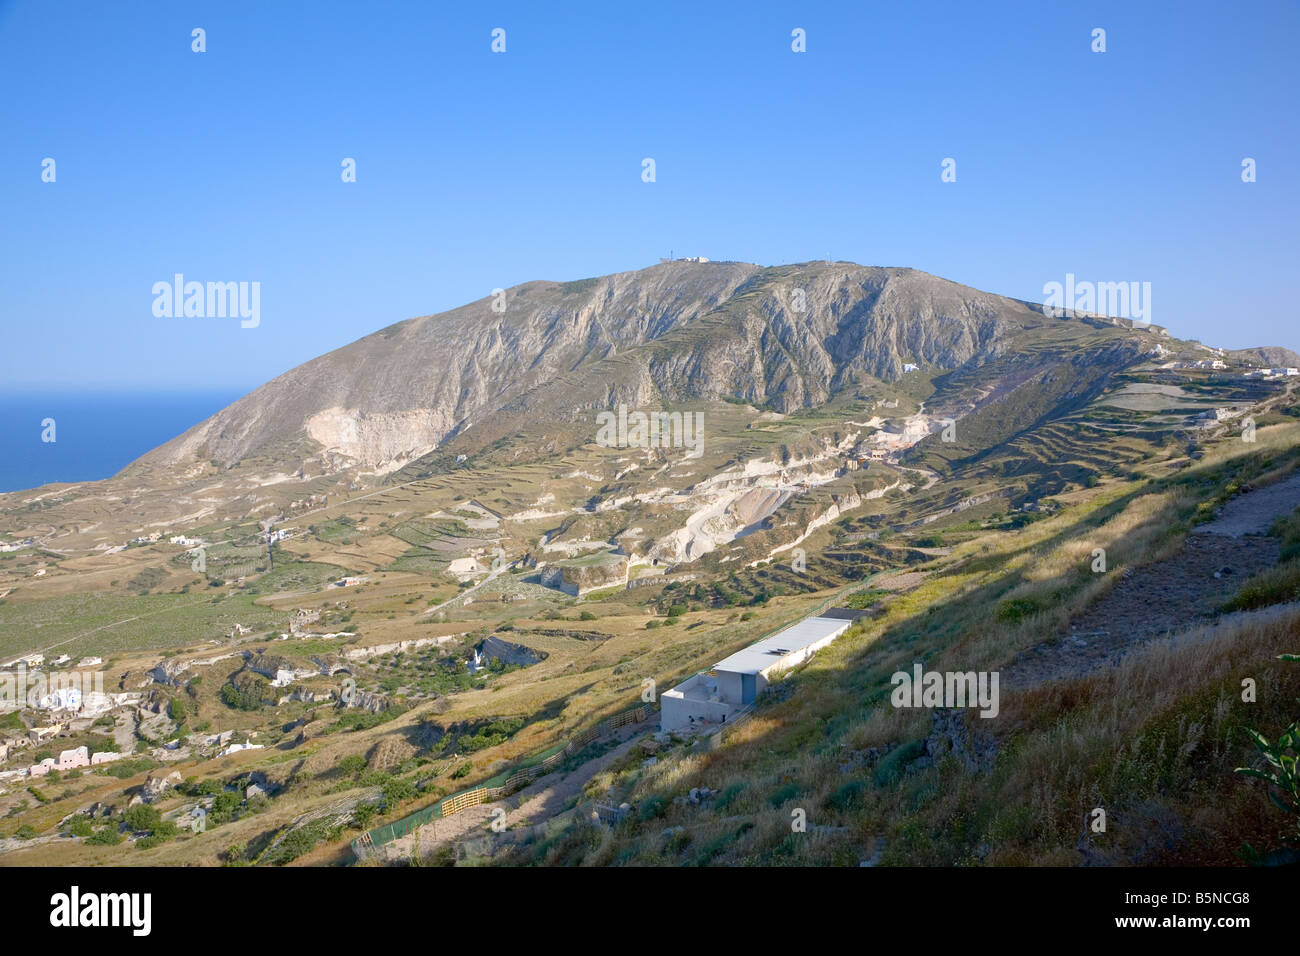 Profitis ilias mountain hi-res stock photography and images - Alamy